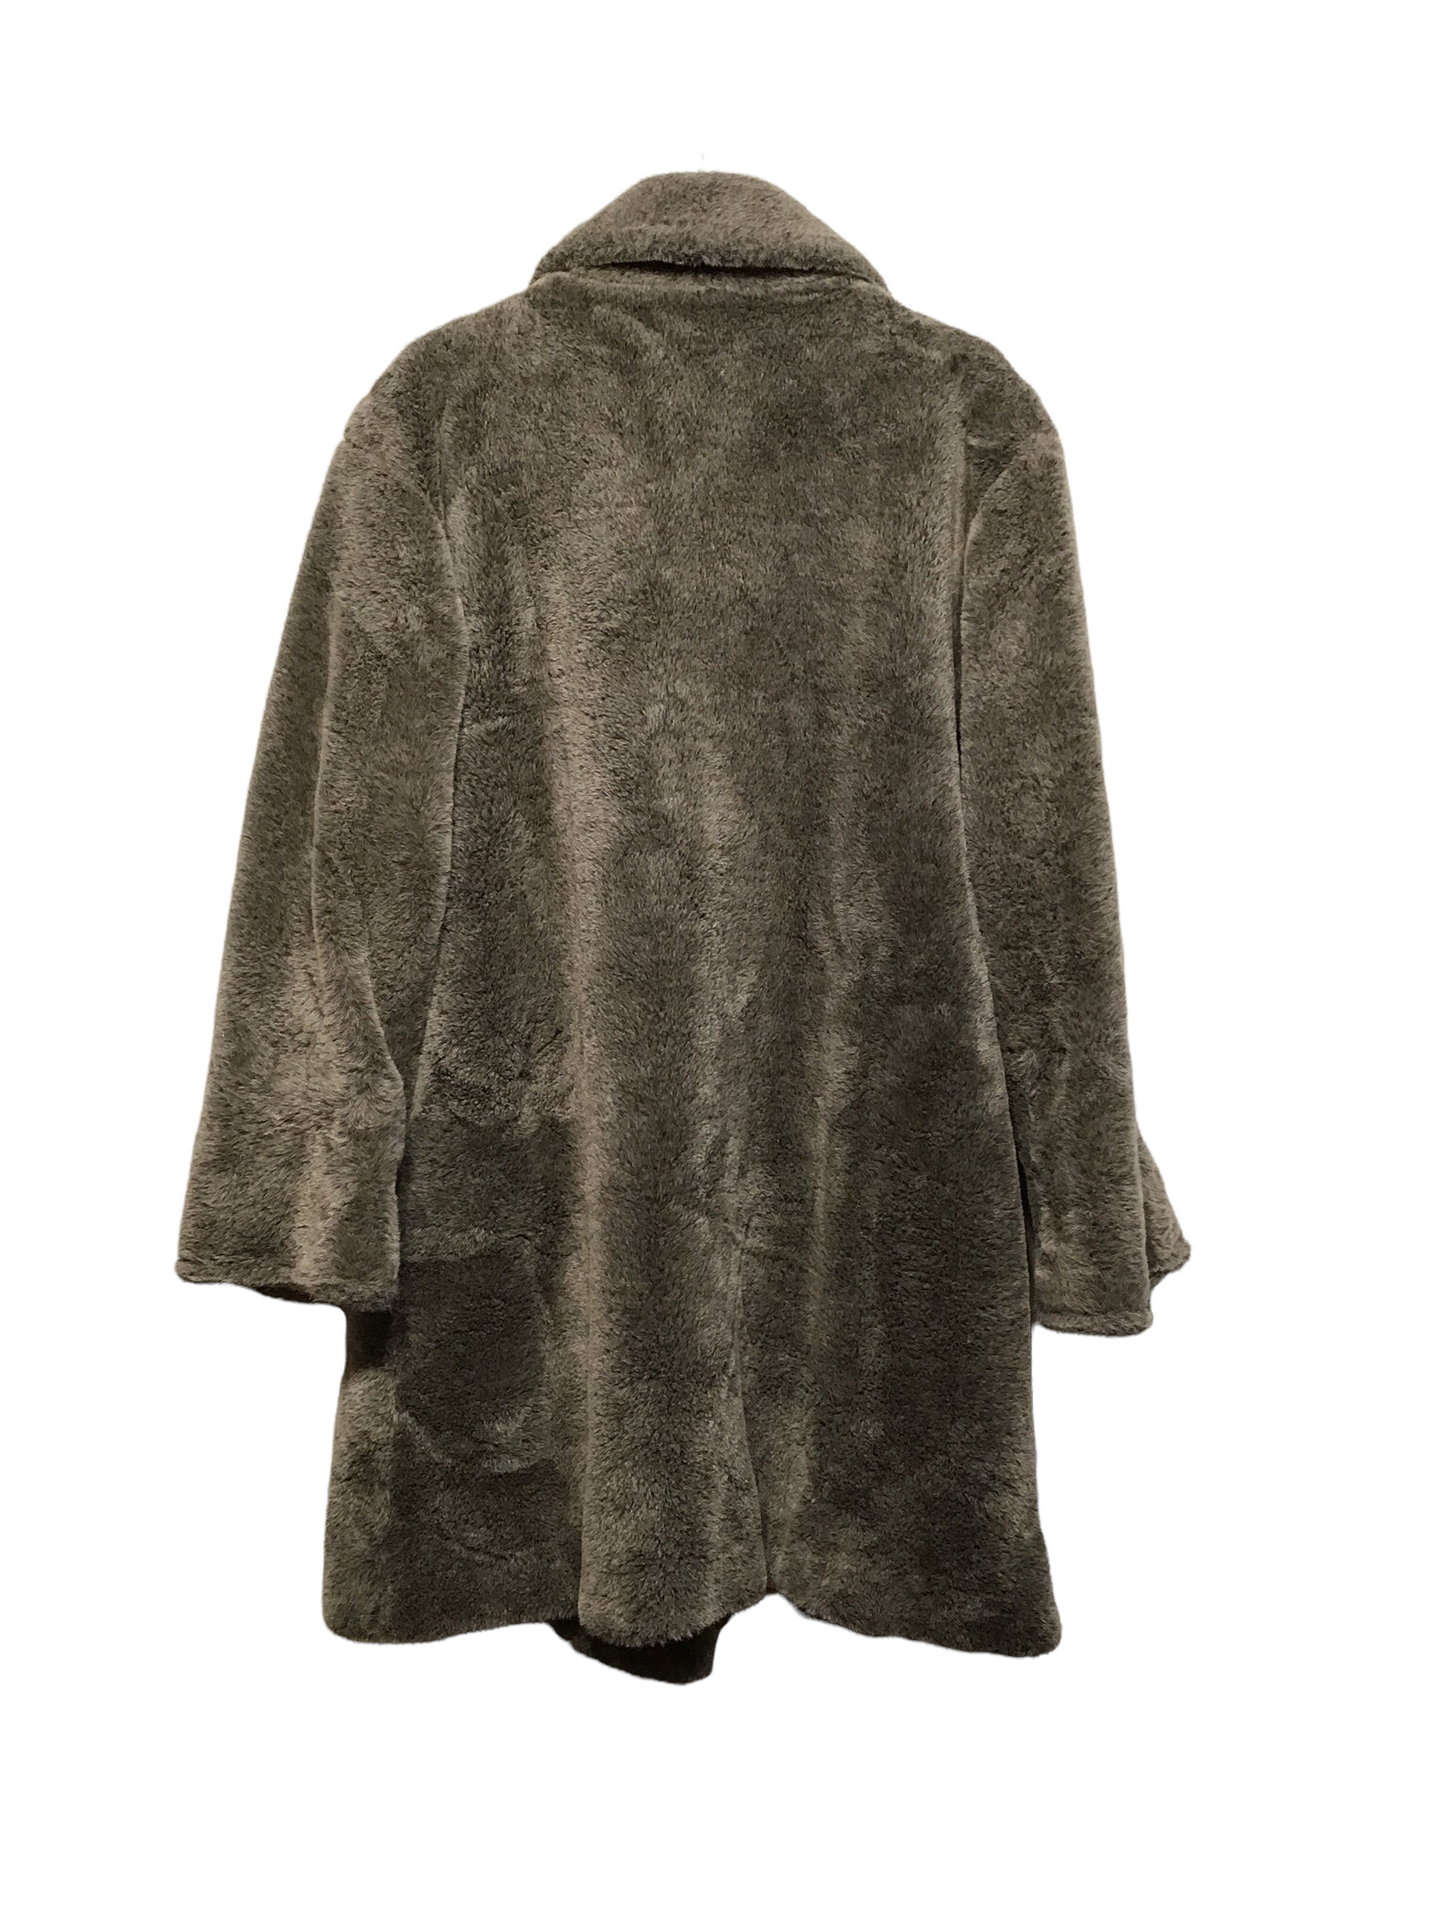 Jones New York Teddy Bear Coat (Size M/L)